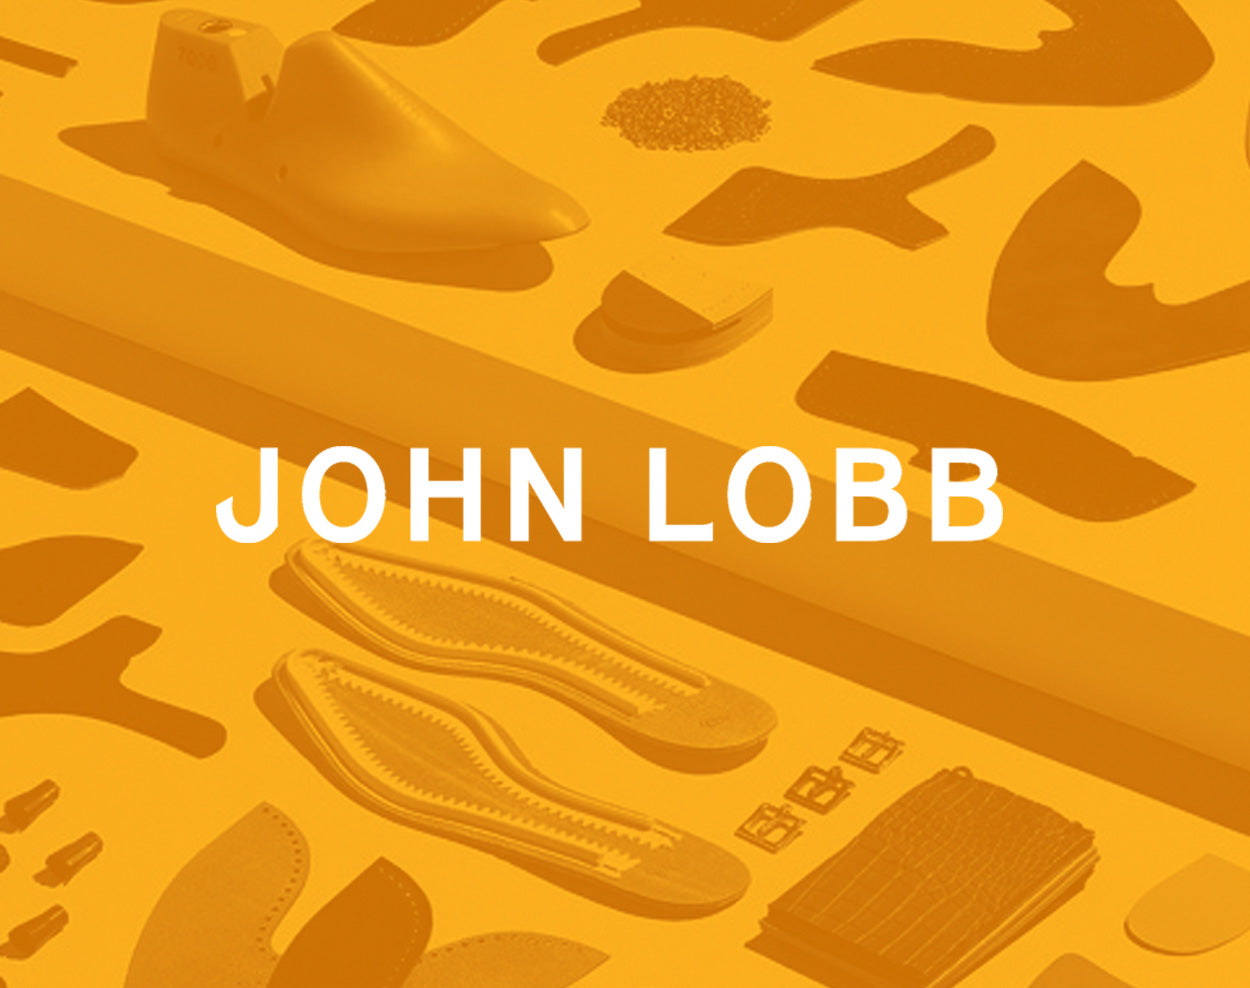 John Lobb Factory Shop Sale - Amazing 